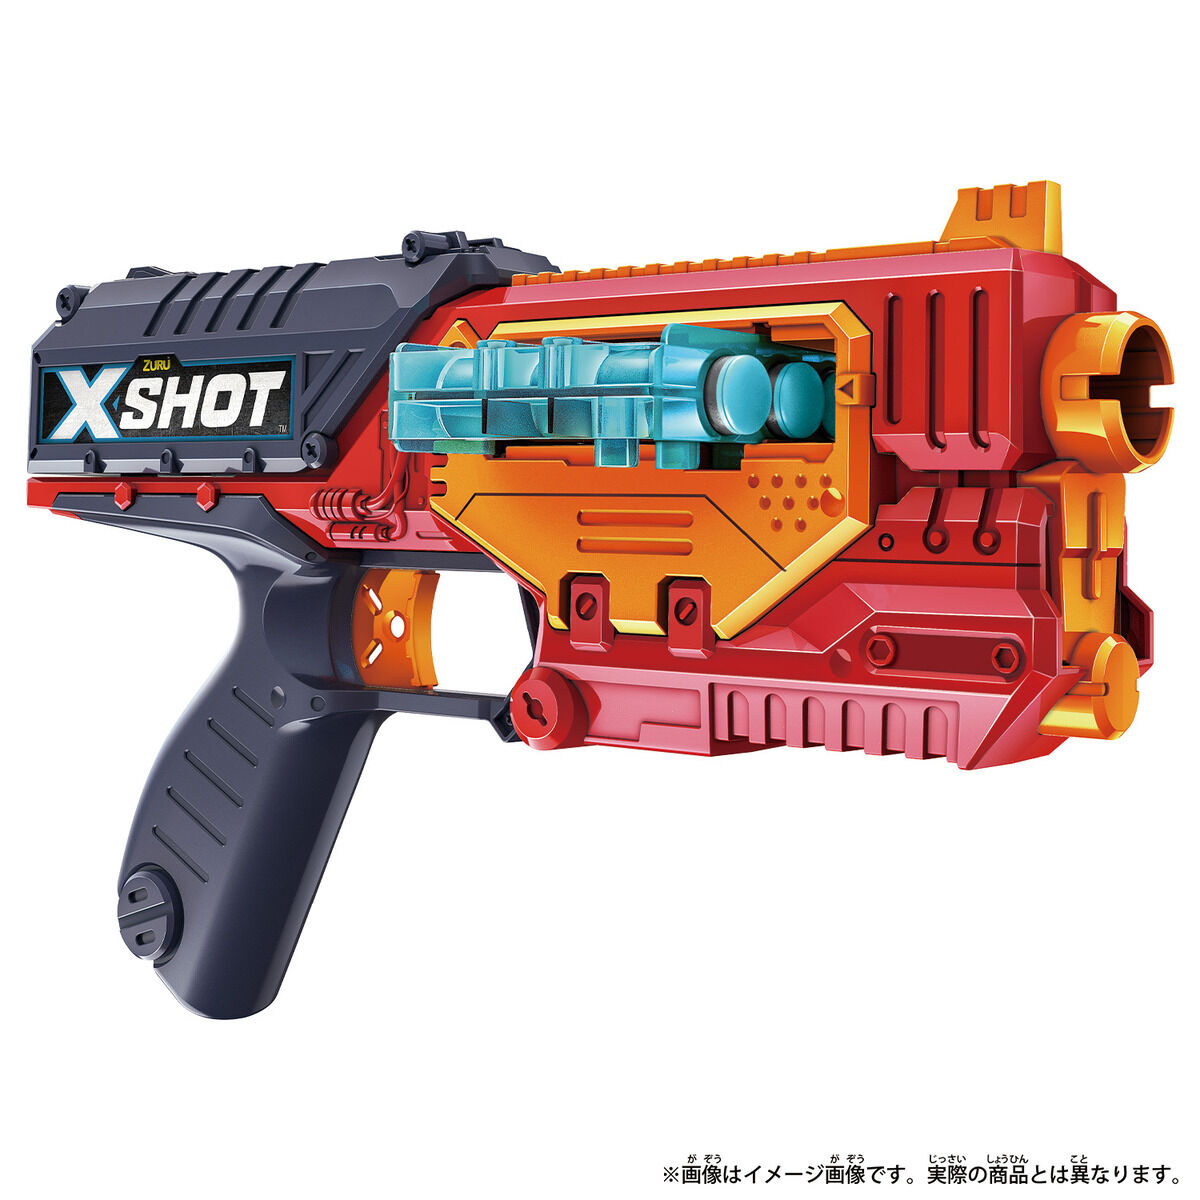 X-SHOT エックスショット クールストライカー クイックスライド ナーフ バンダイ ガン 銃 おもちゃ 男の子 子供 プレゼント  4549660829270 | エボリューションホビー